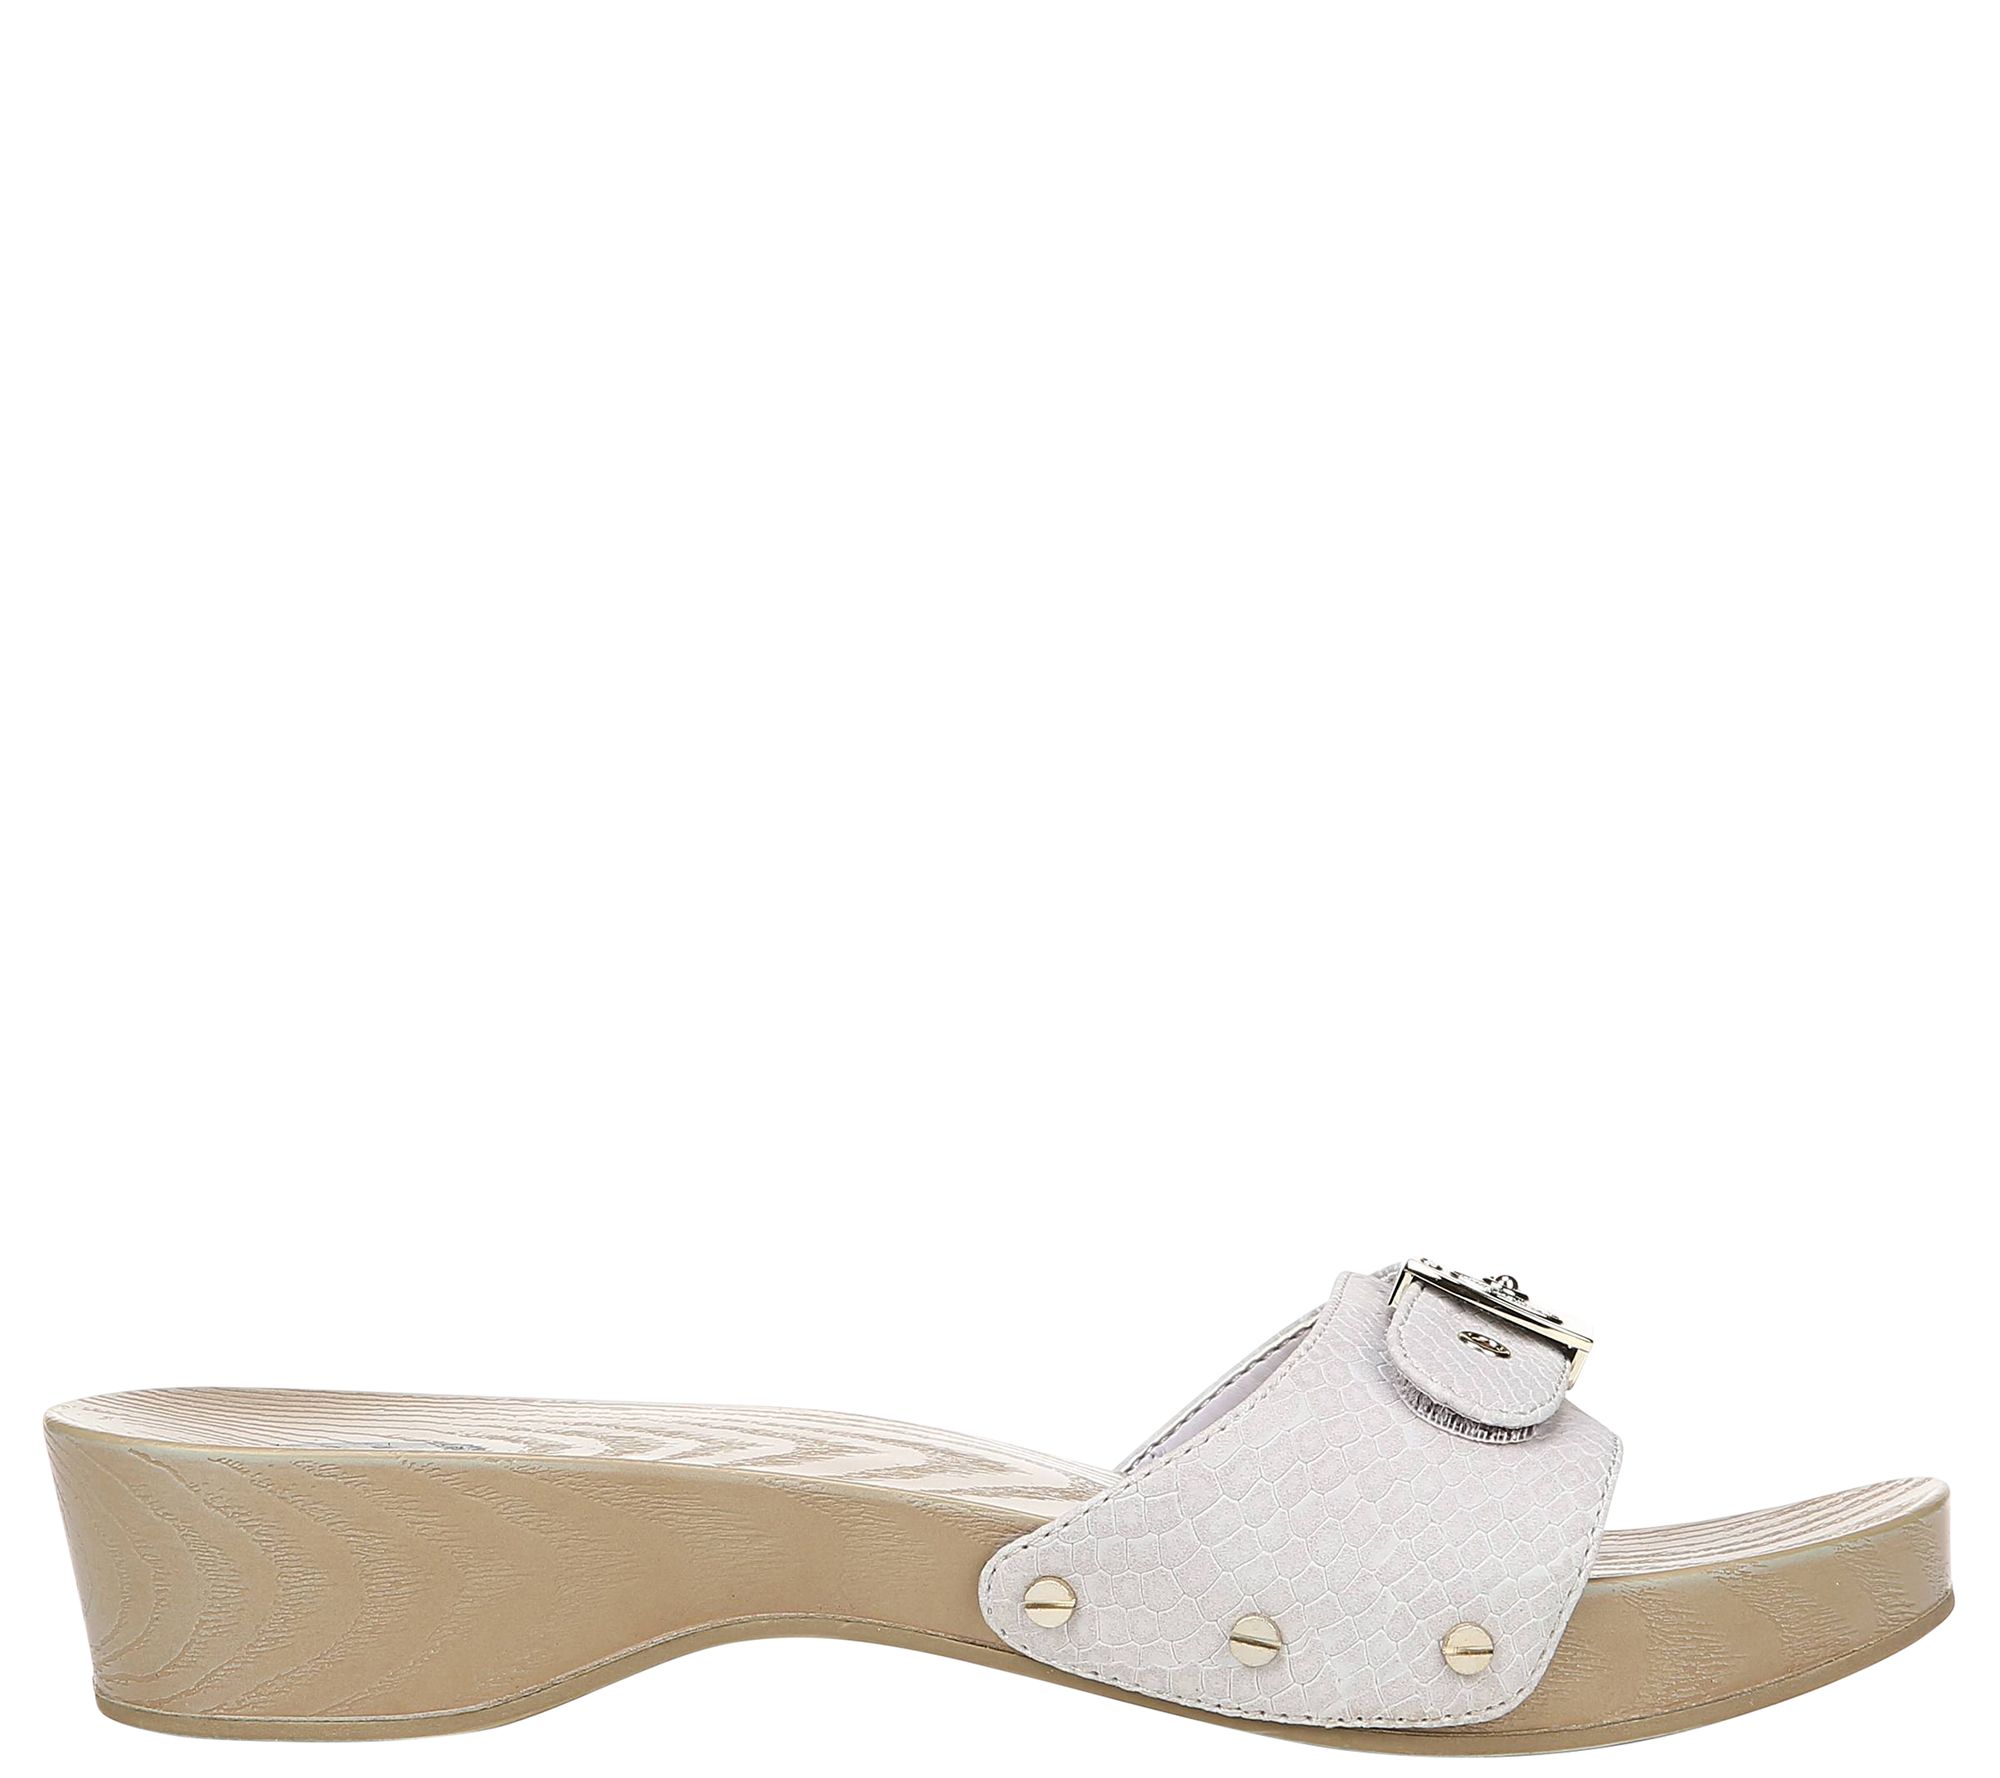 Dr. Scholl's Slide Sandals - Classic - QVC.com